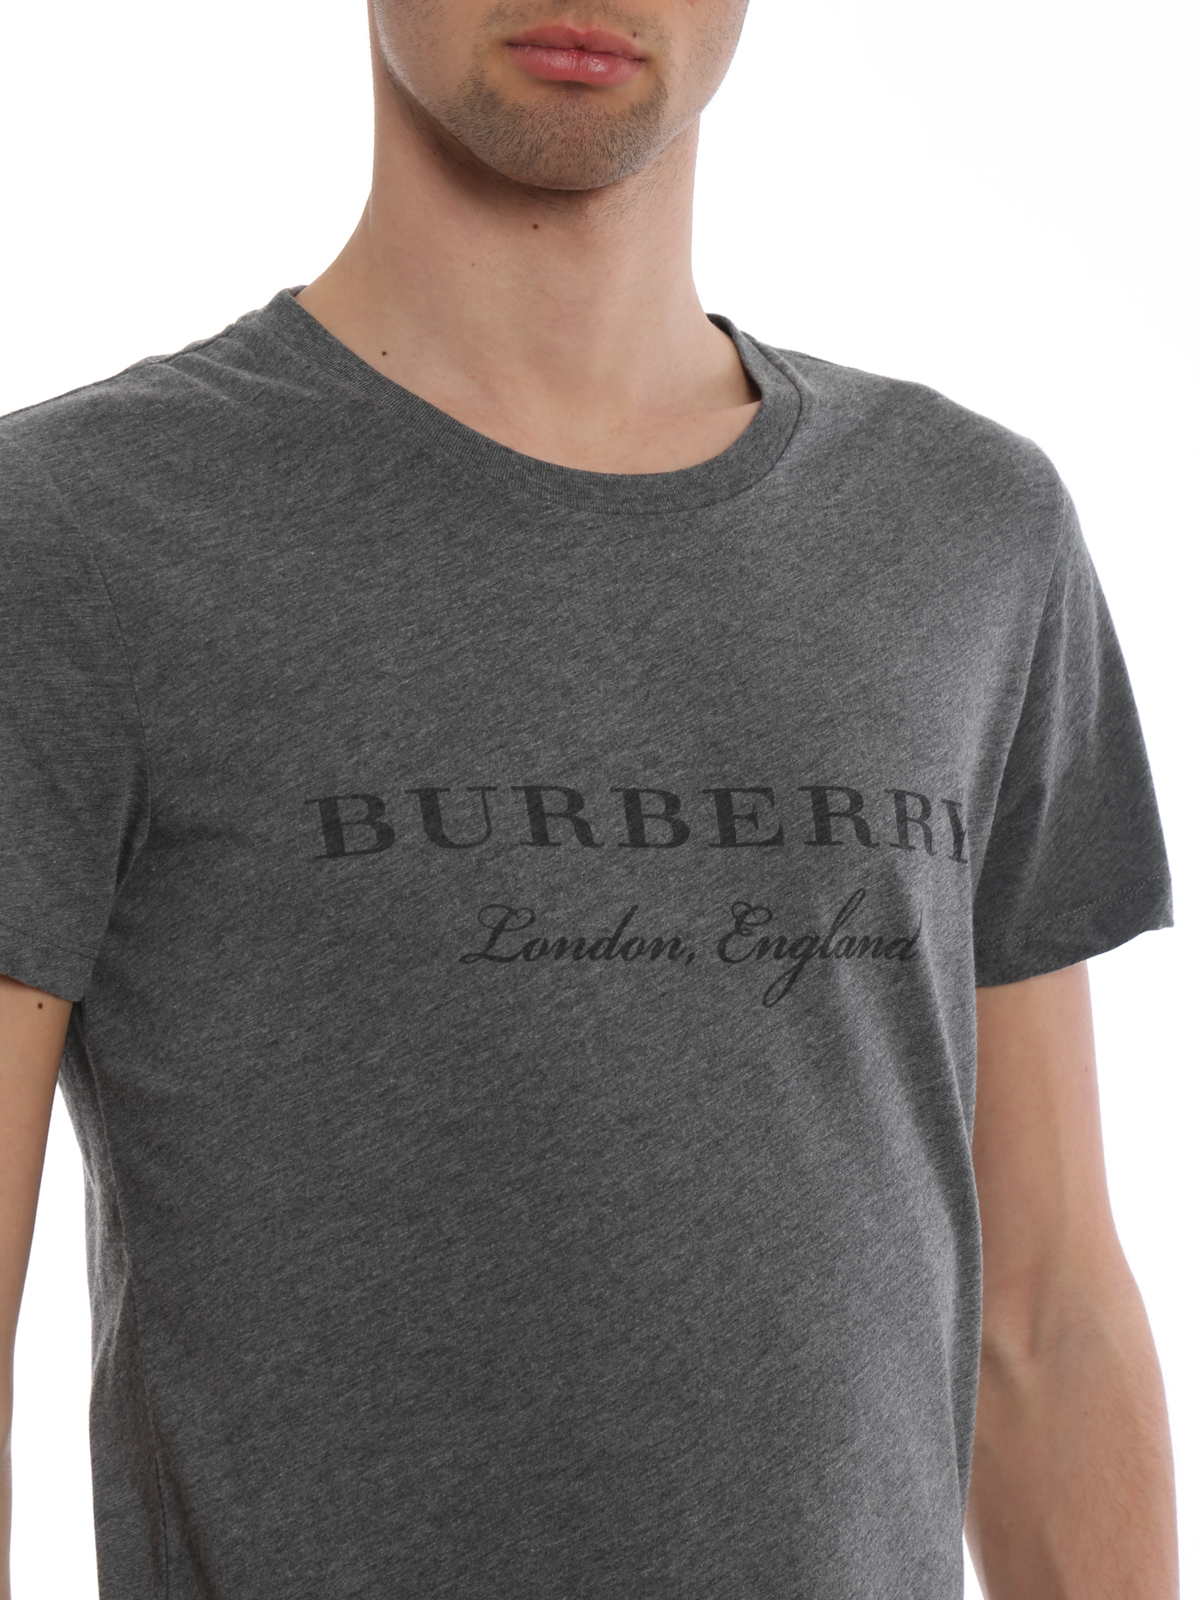 burberry london t shirt